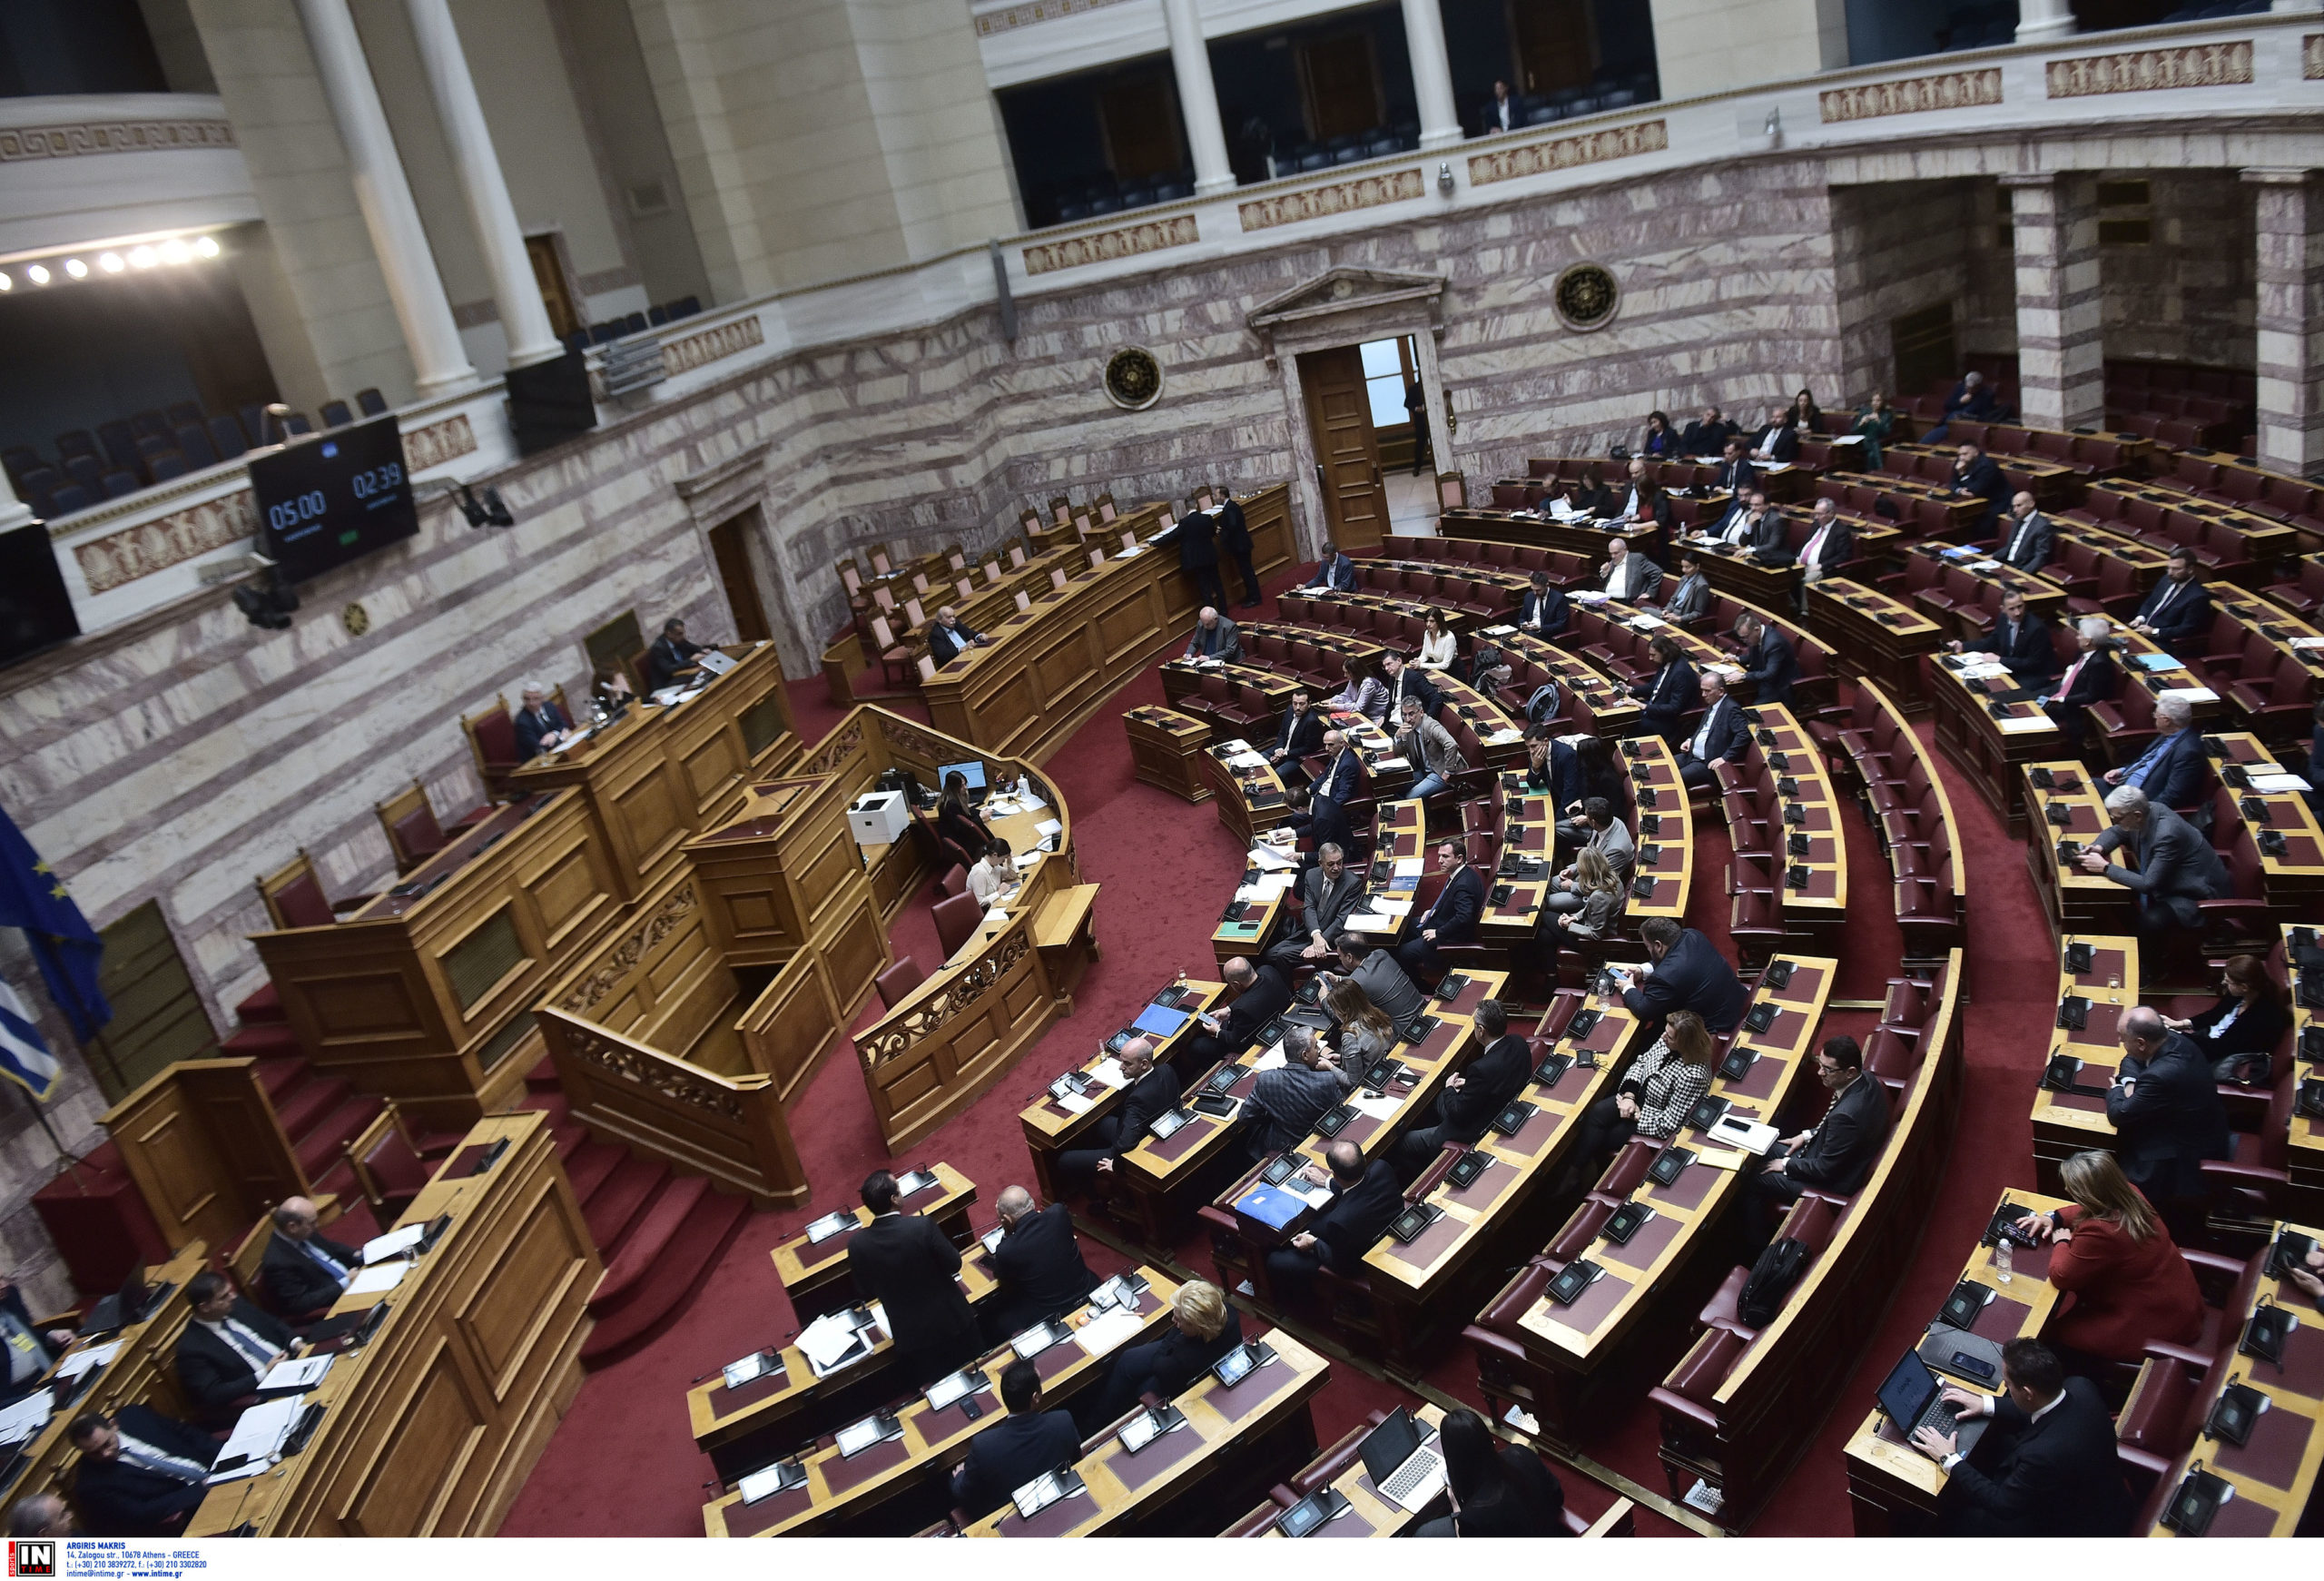 Boυλή: Ευρεία πλειοψηφία «εξασφάλισε» η επιστολική ψήφος στις ευρωεκλογές